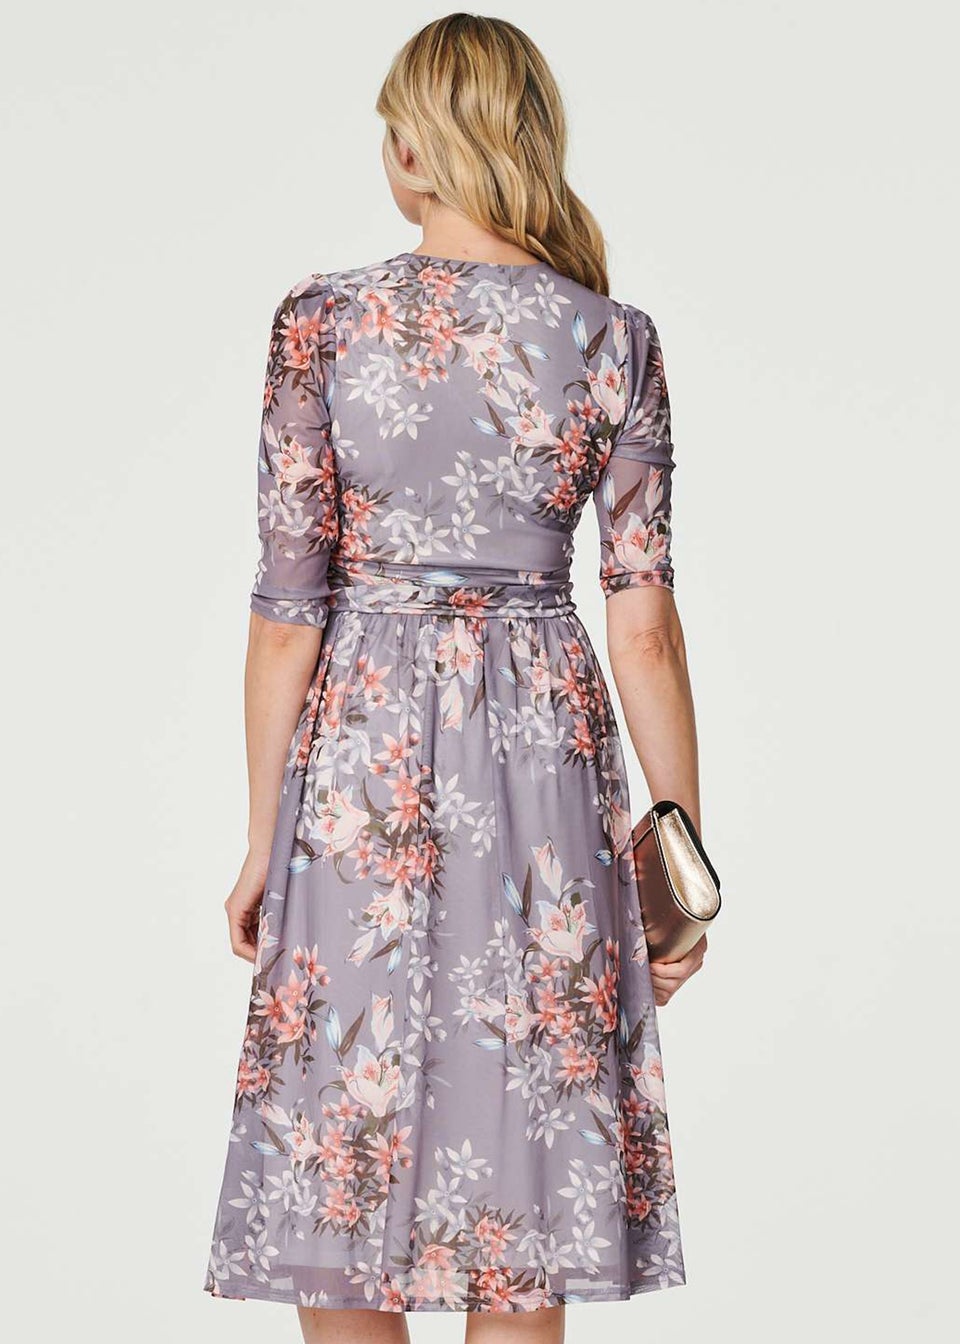 Izabel London Grey Floral Layered V-Neck Midi Dress